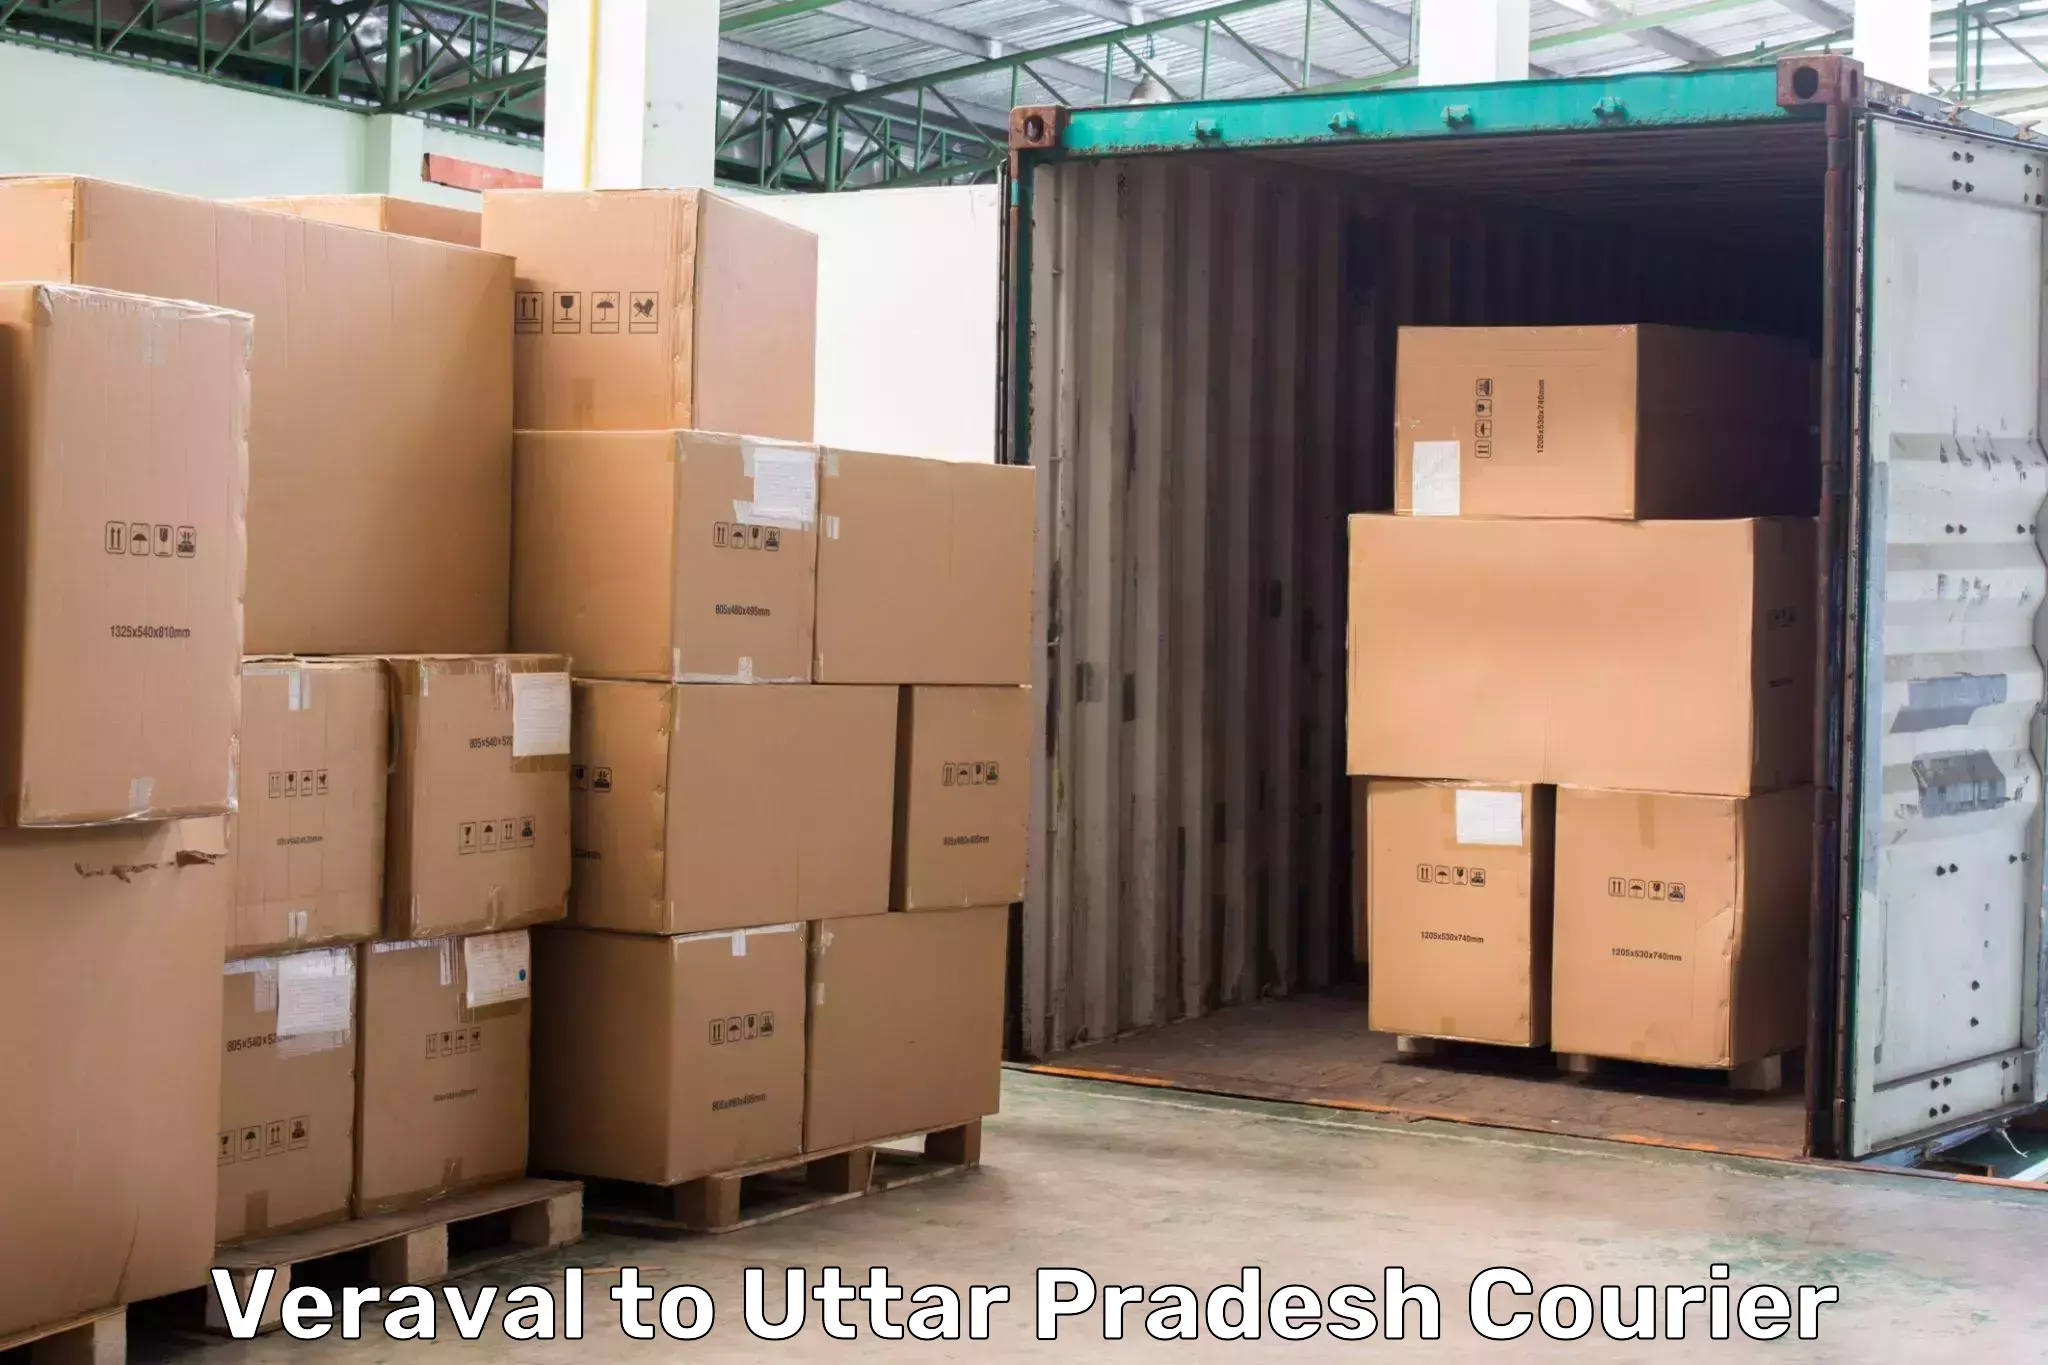 On-demand shipping options Veraval to Vrindavan